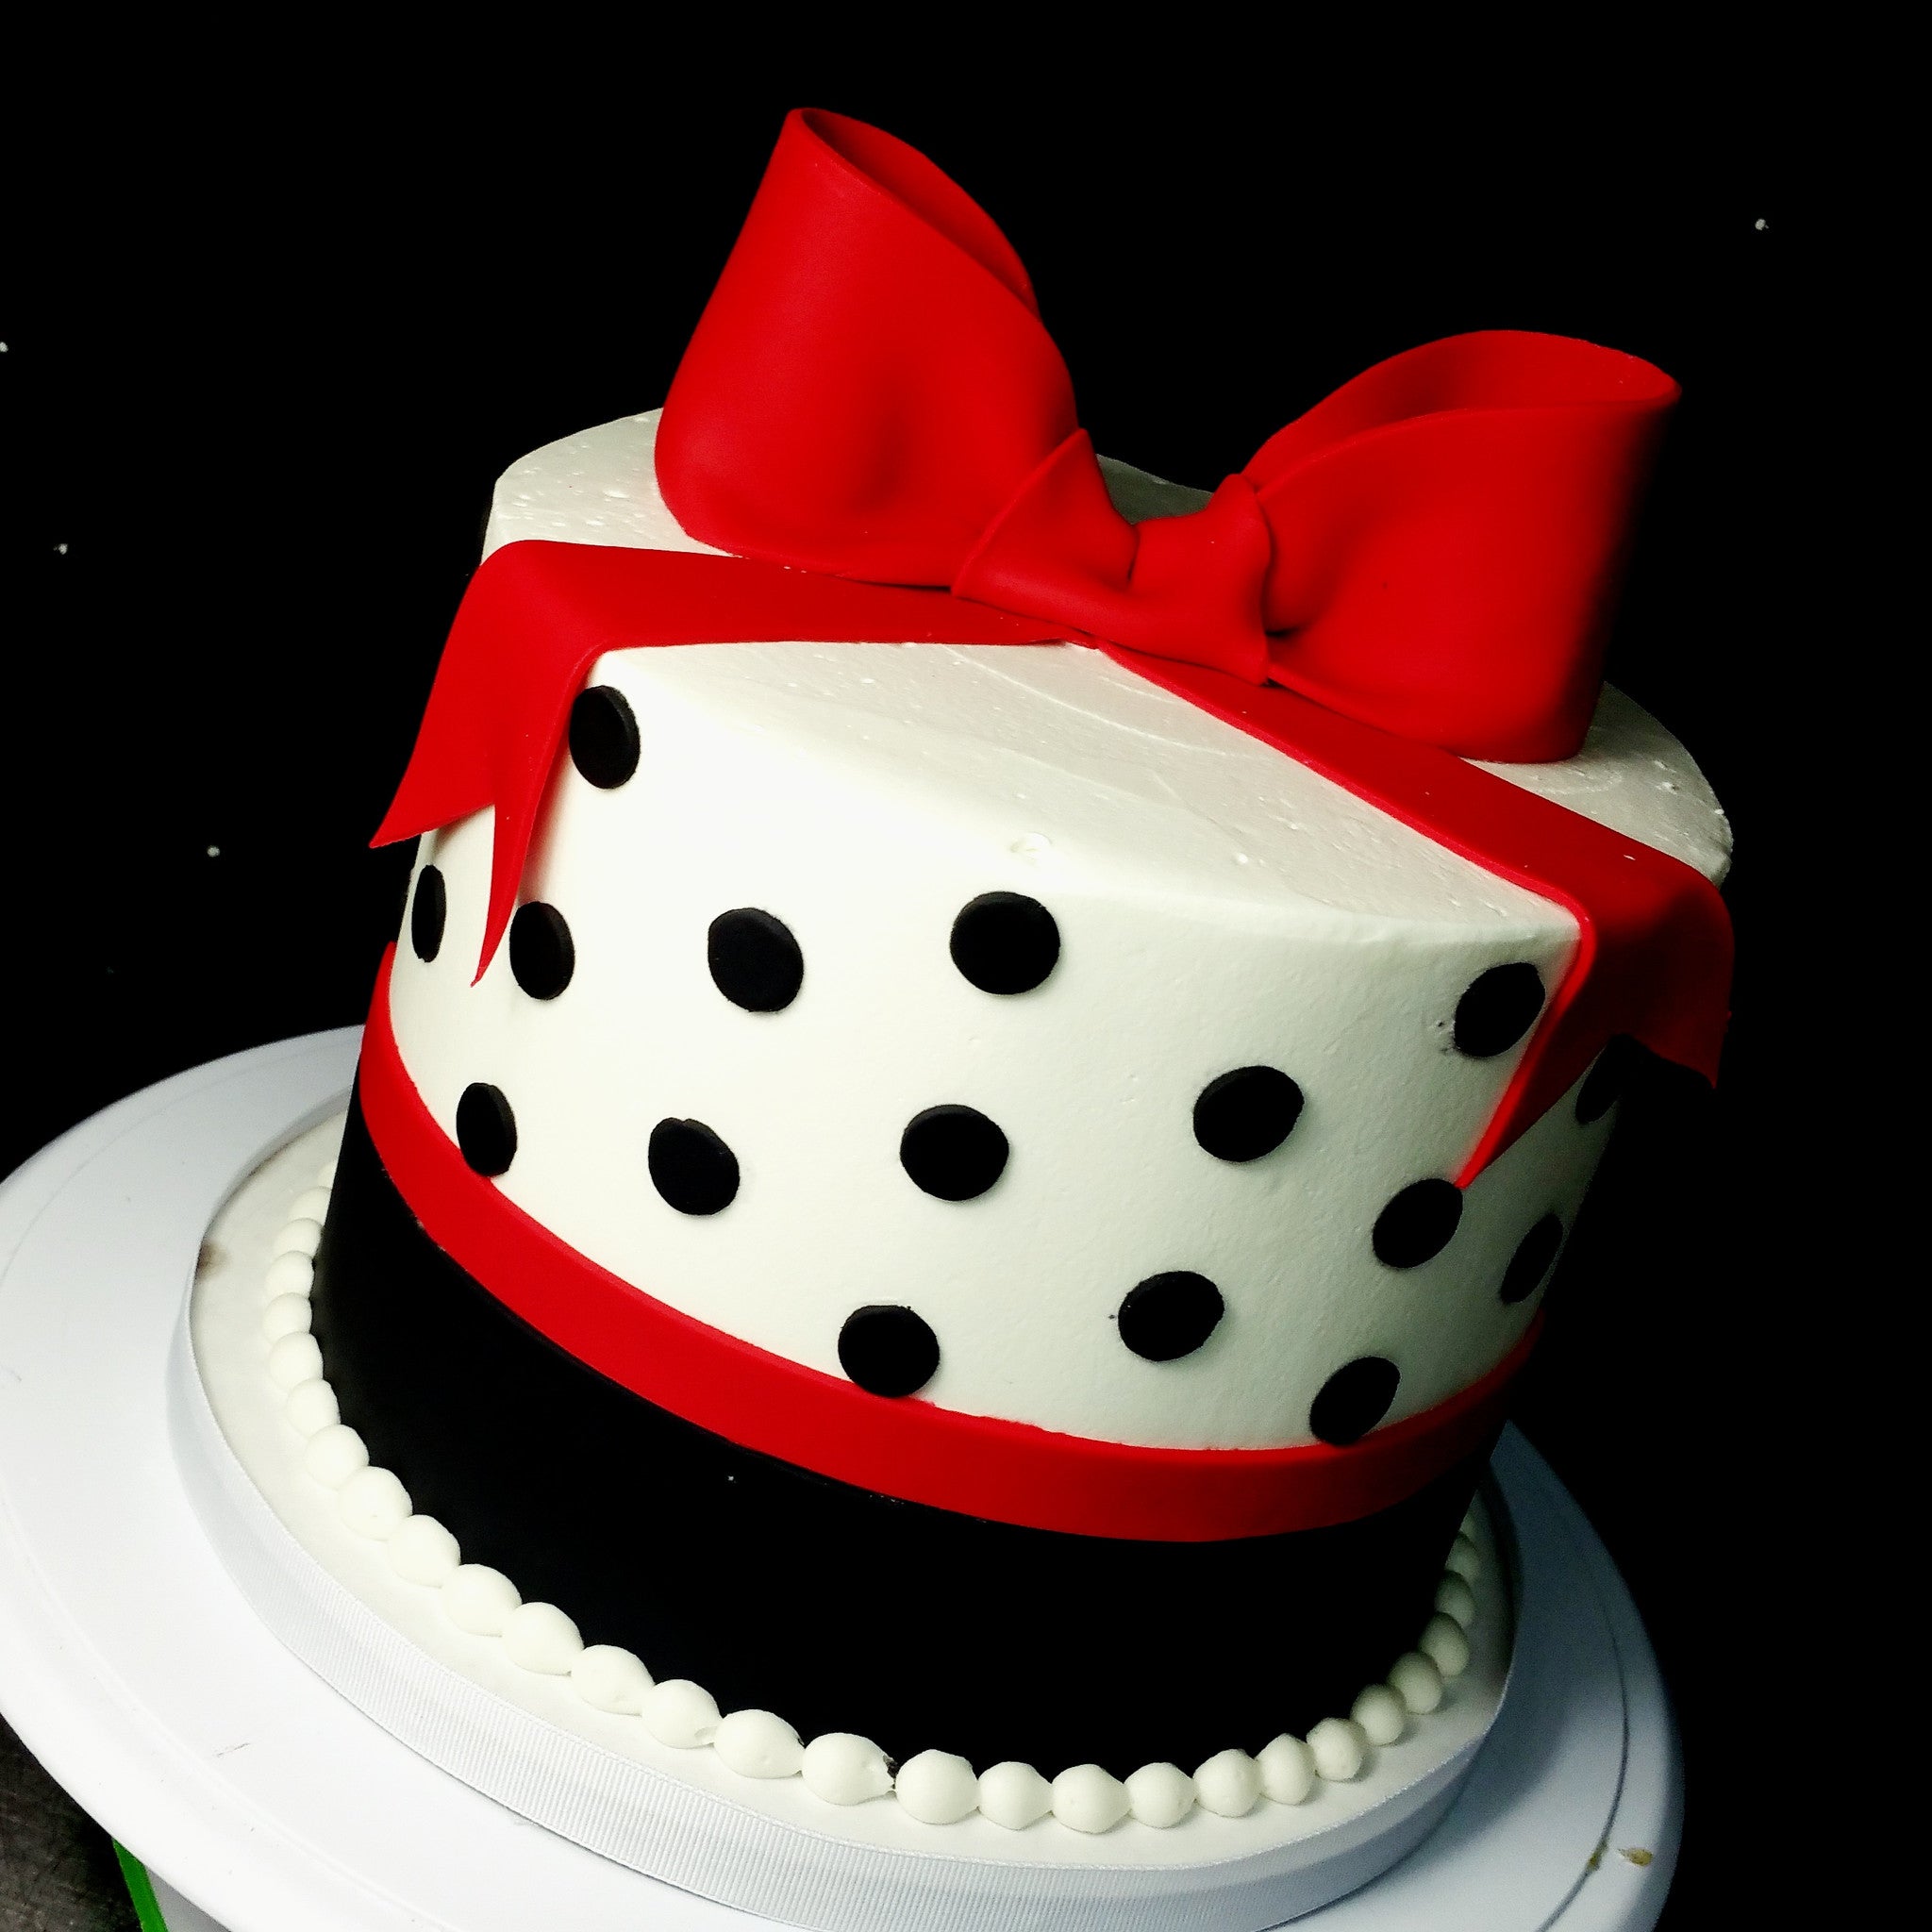 Red and black zebra stripe cake - Decorated Cake by Mark - CakesDecor